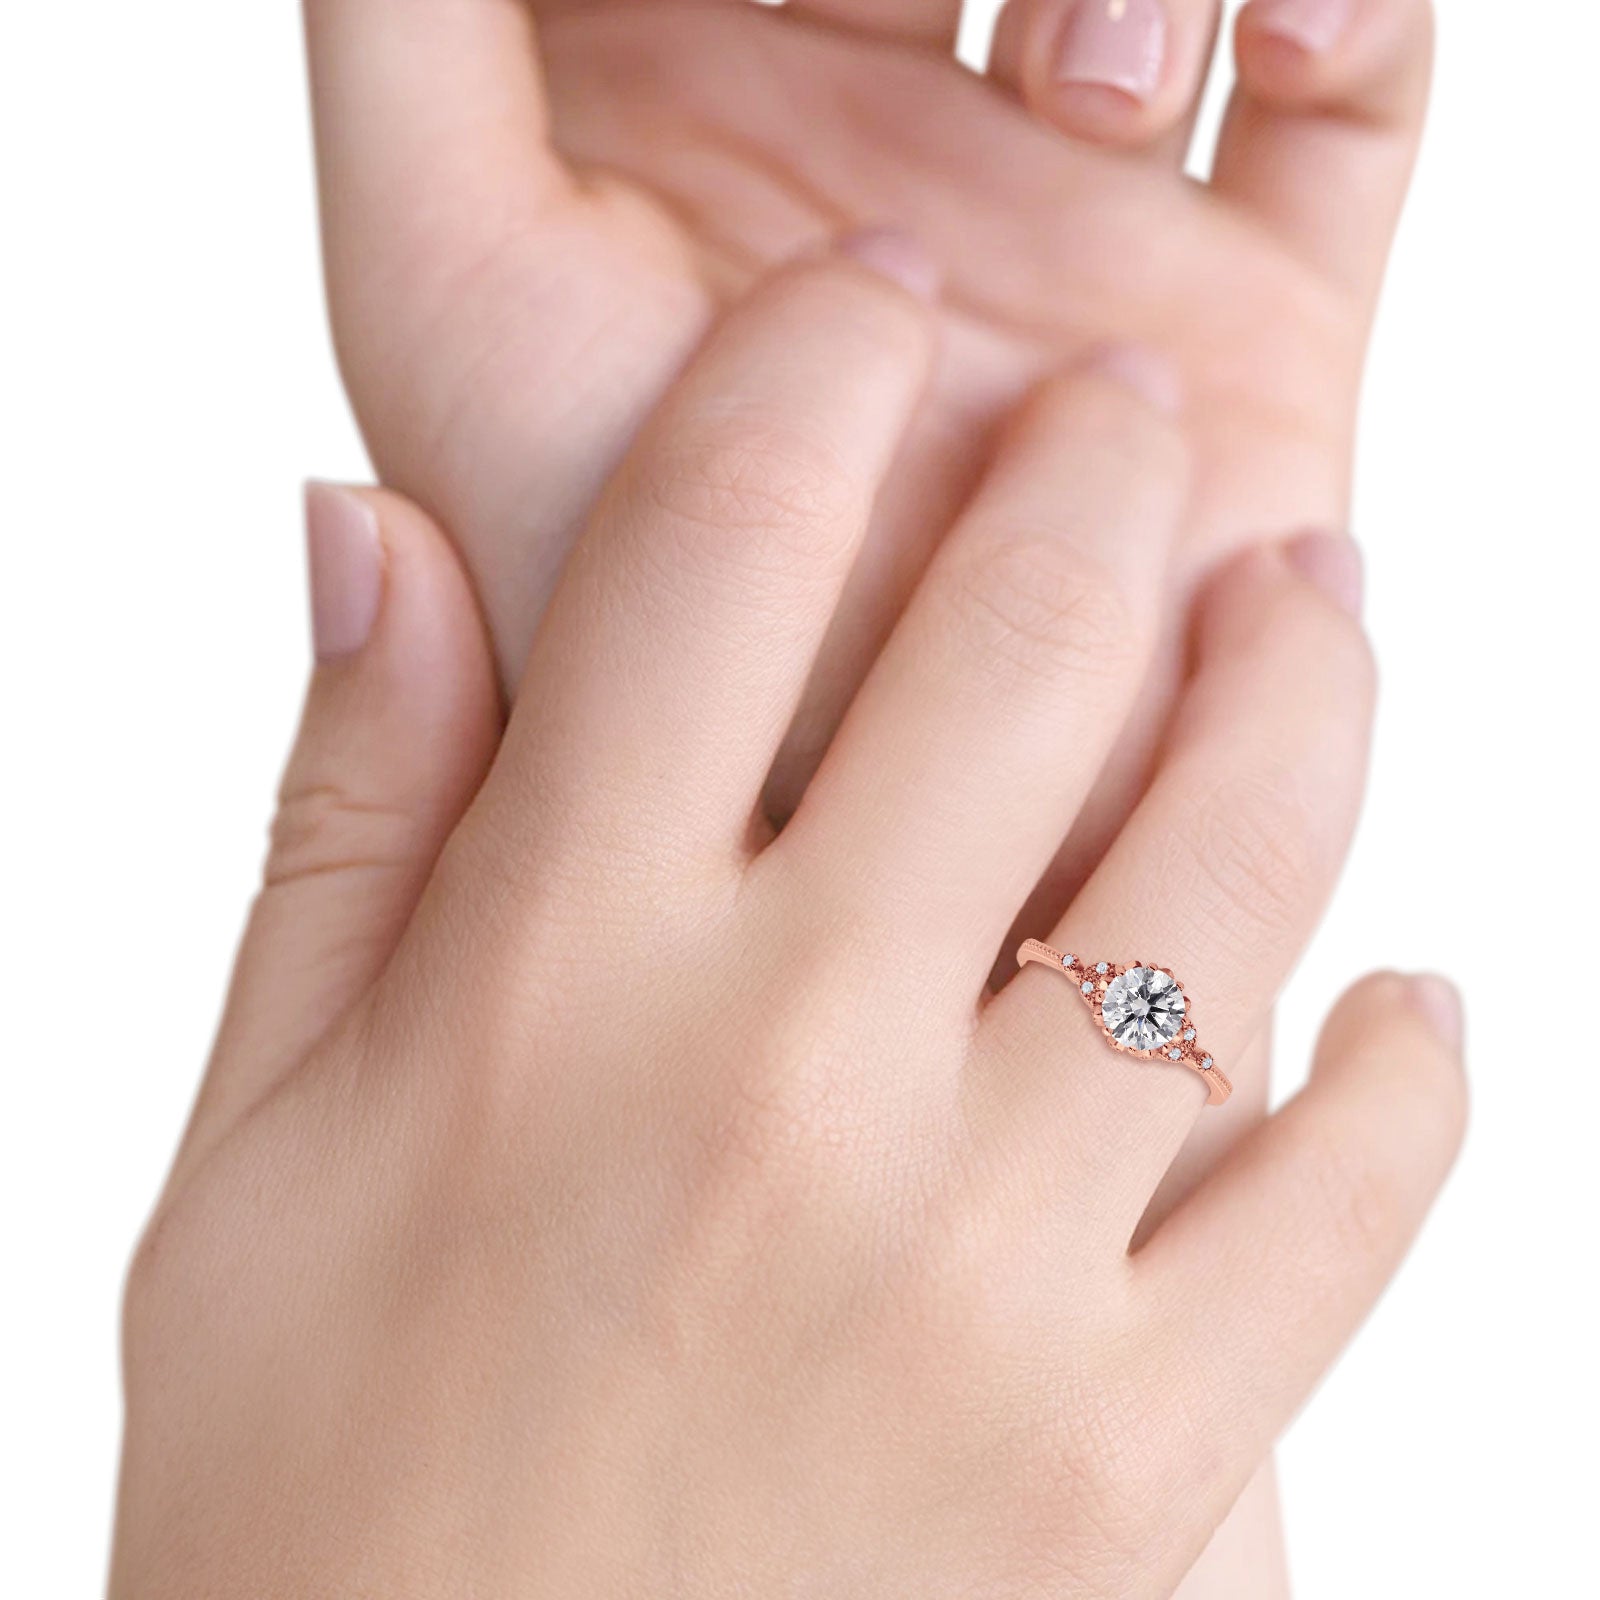 14K Gold Round Art Deco Fashion GIA Certified 6.5mm D VS1 1.01ct Lab Grown CVD Diamond Engagement Wedding Ring